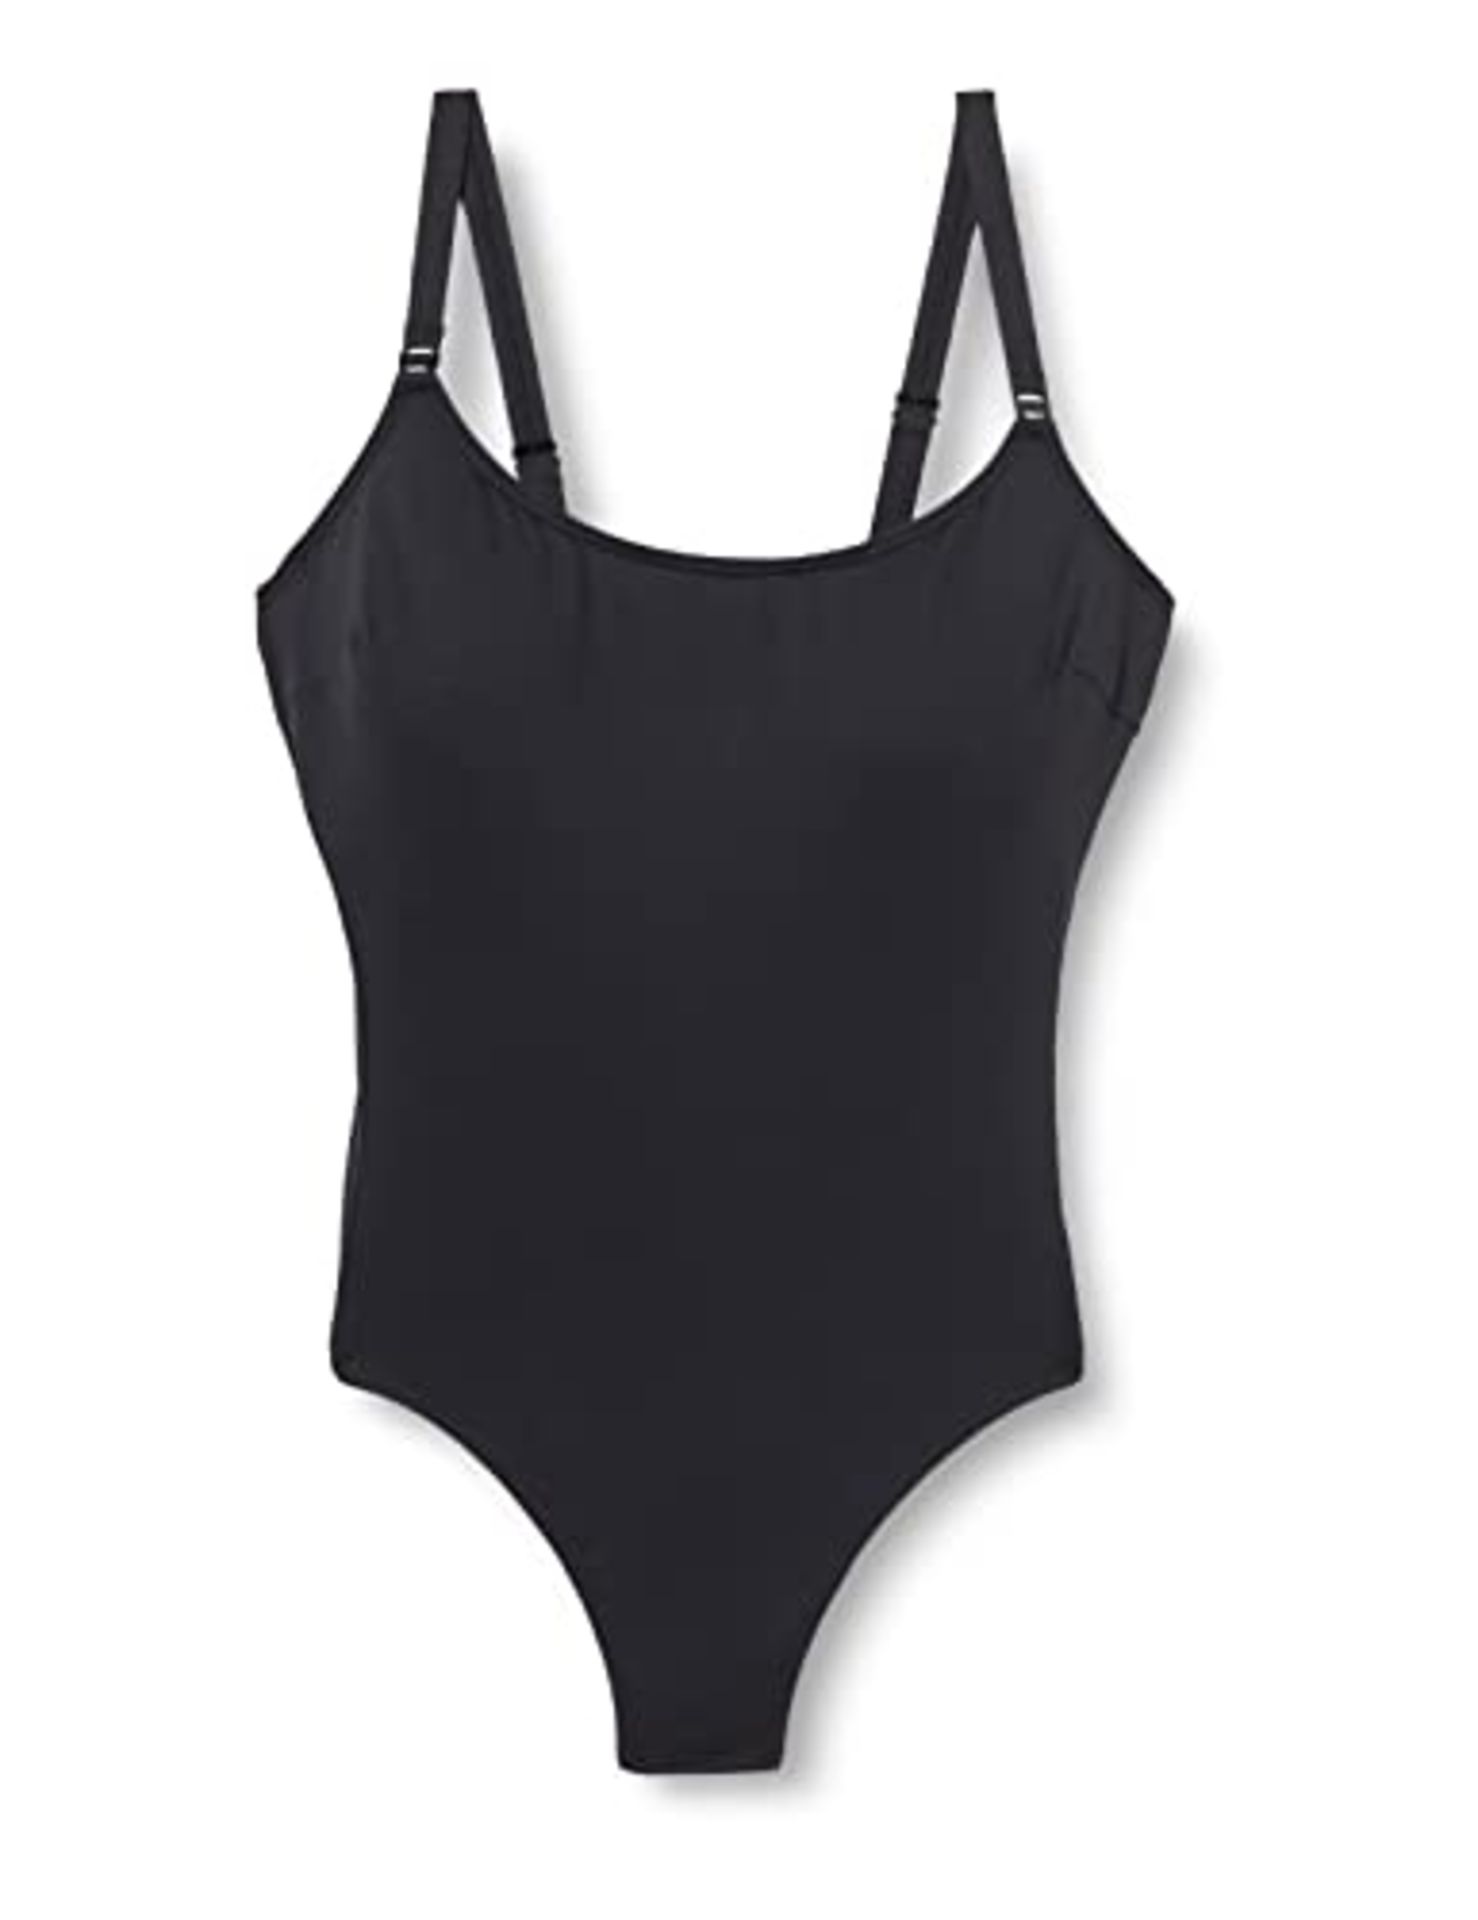 Esprit Bodywear Women's Tura Beach Ay Rcs Swimsuit, One-Piece, Black, 40C